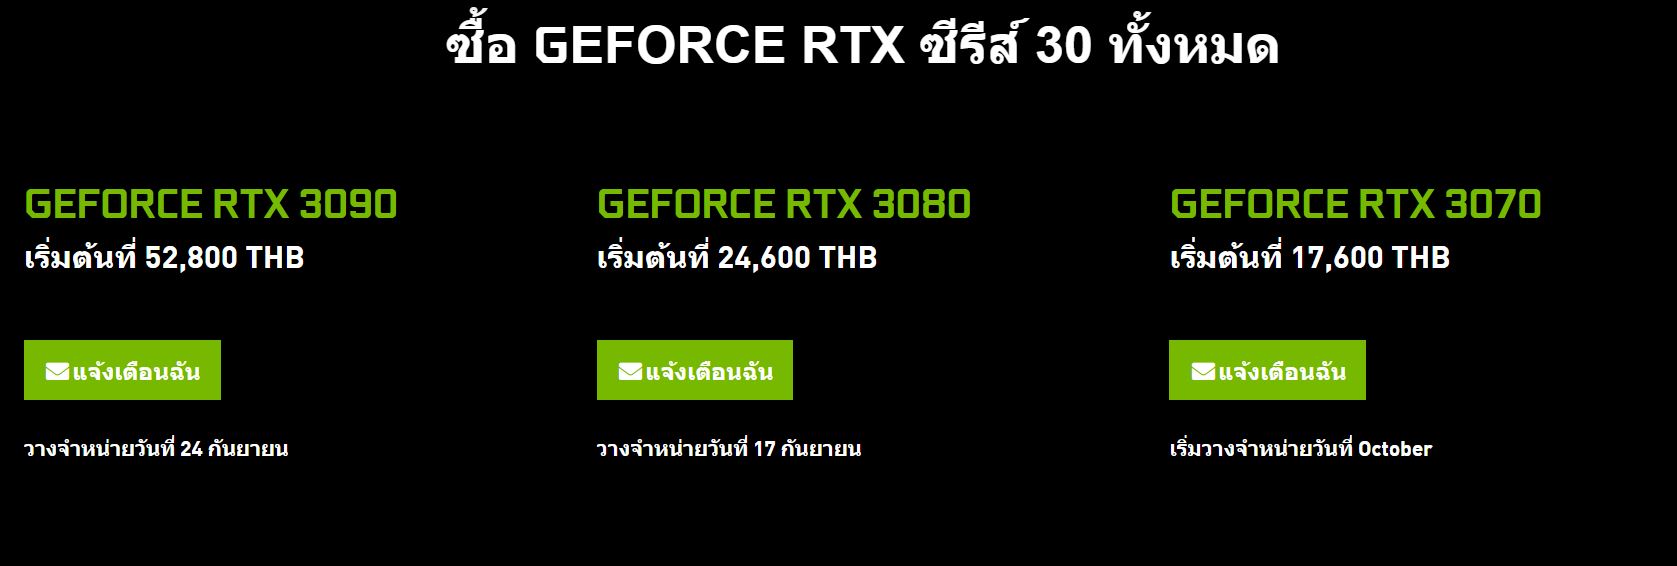 Nvidia GeForce RTX 30 Series